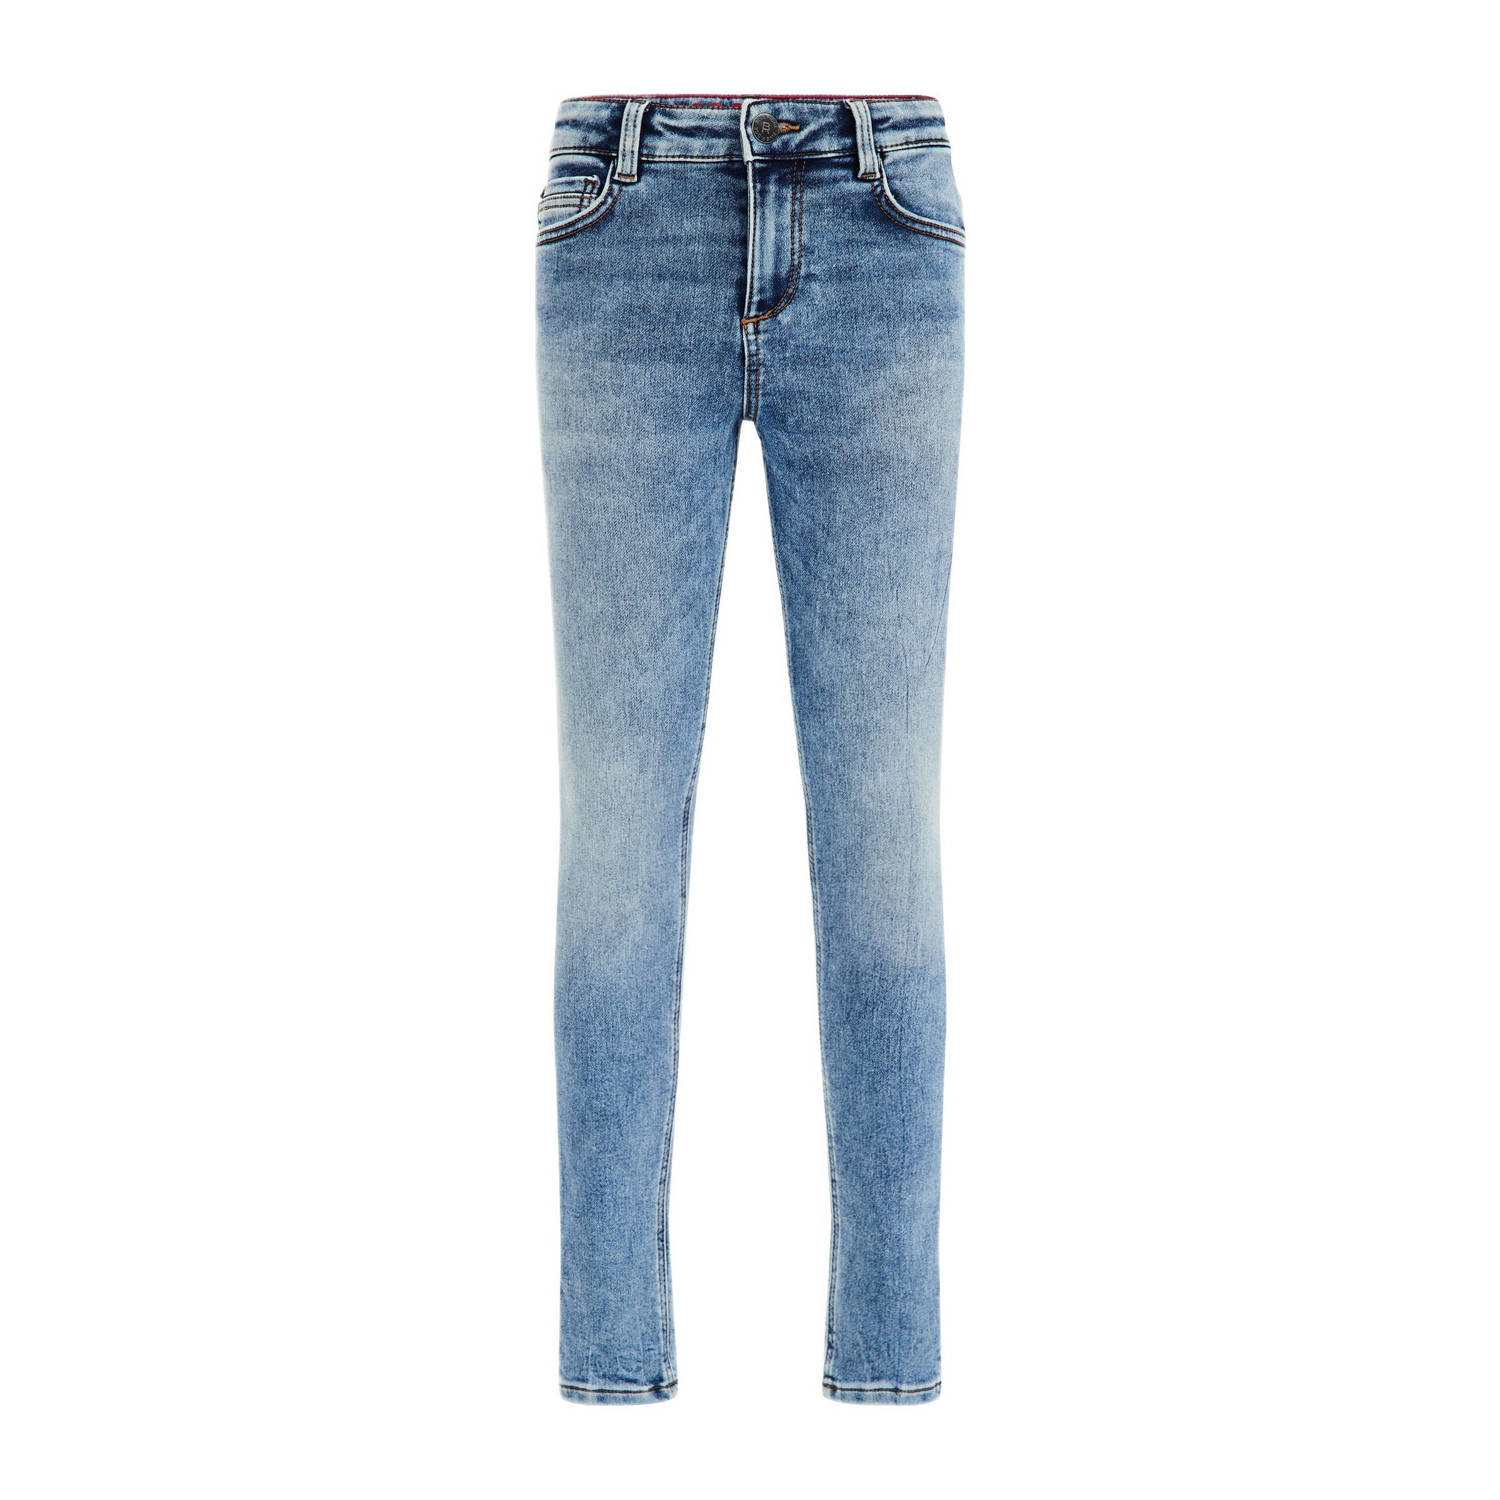 WE Fashion Blue Ridge slim fit jeans used denim